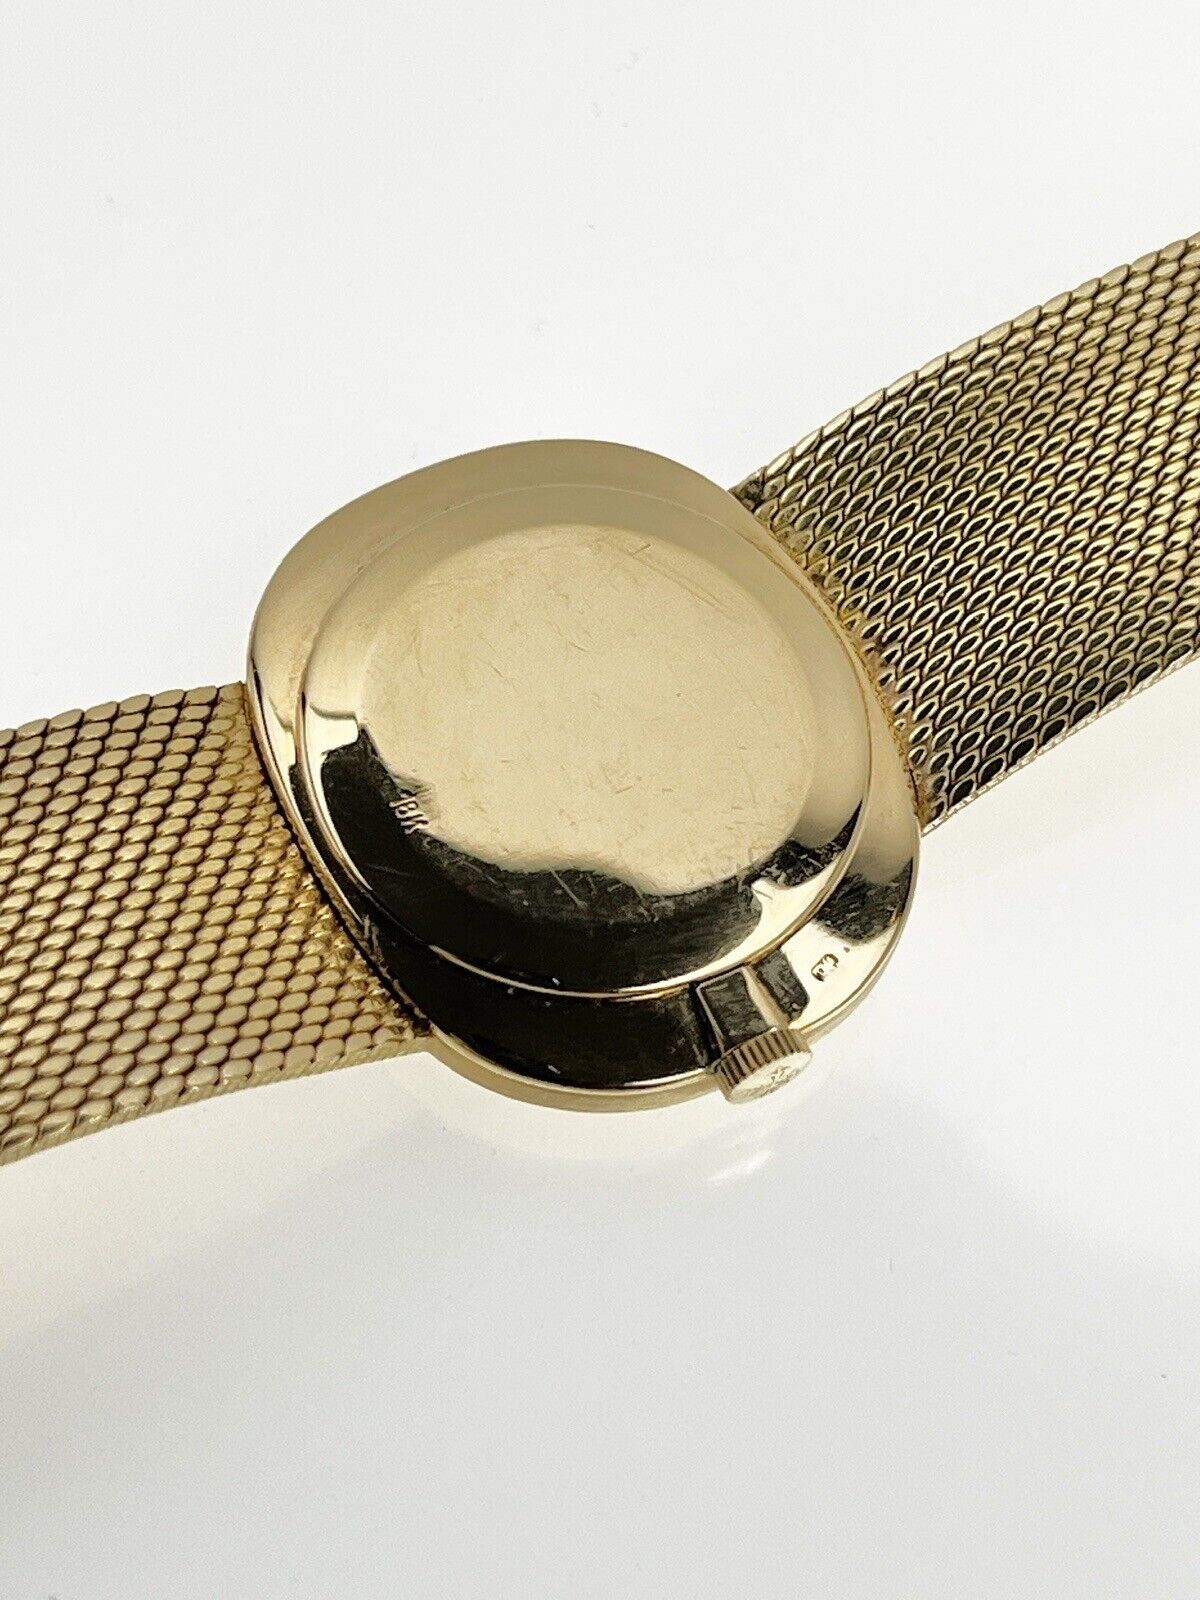 Patek Philippe Ellipse Ref 3581 Full 18K Yellow Gold Manual Winding Wrist Watch